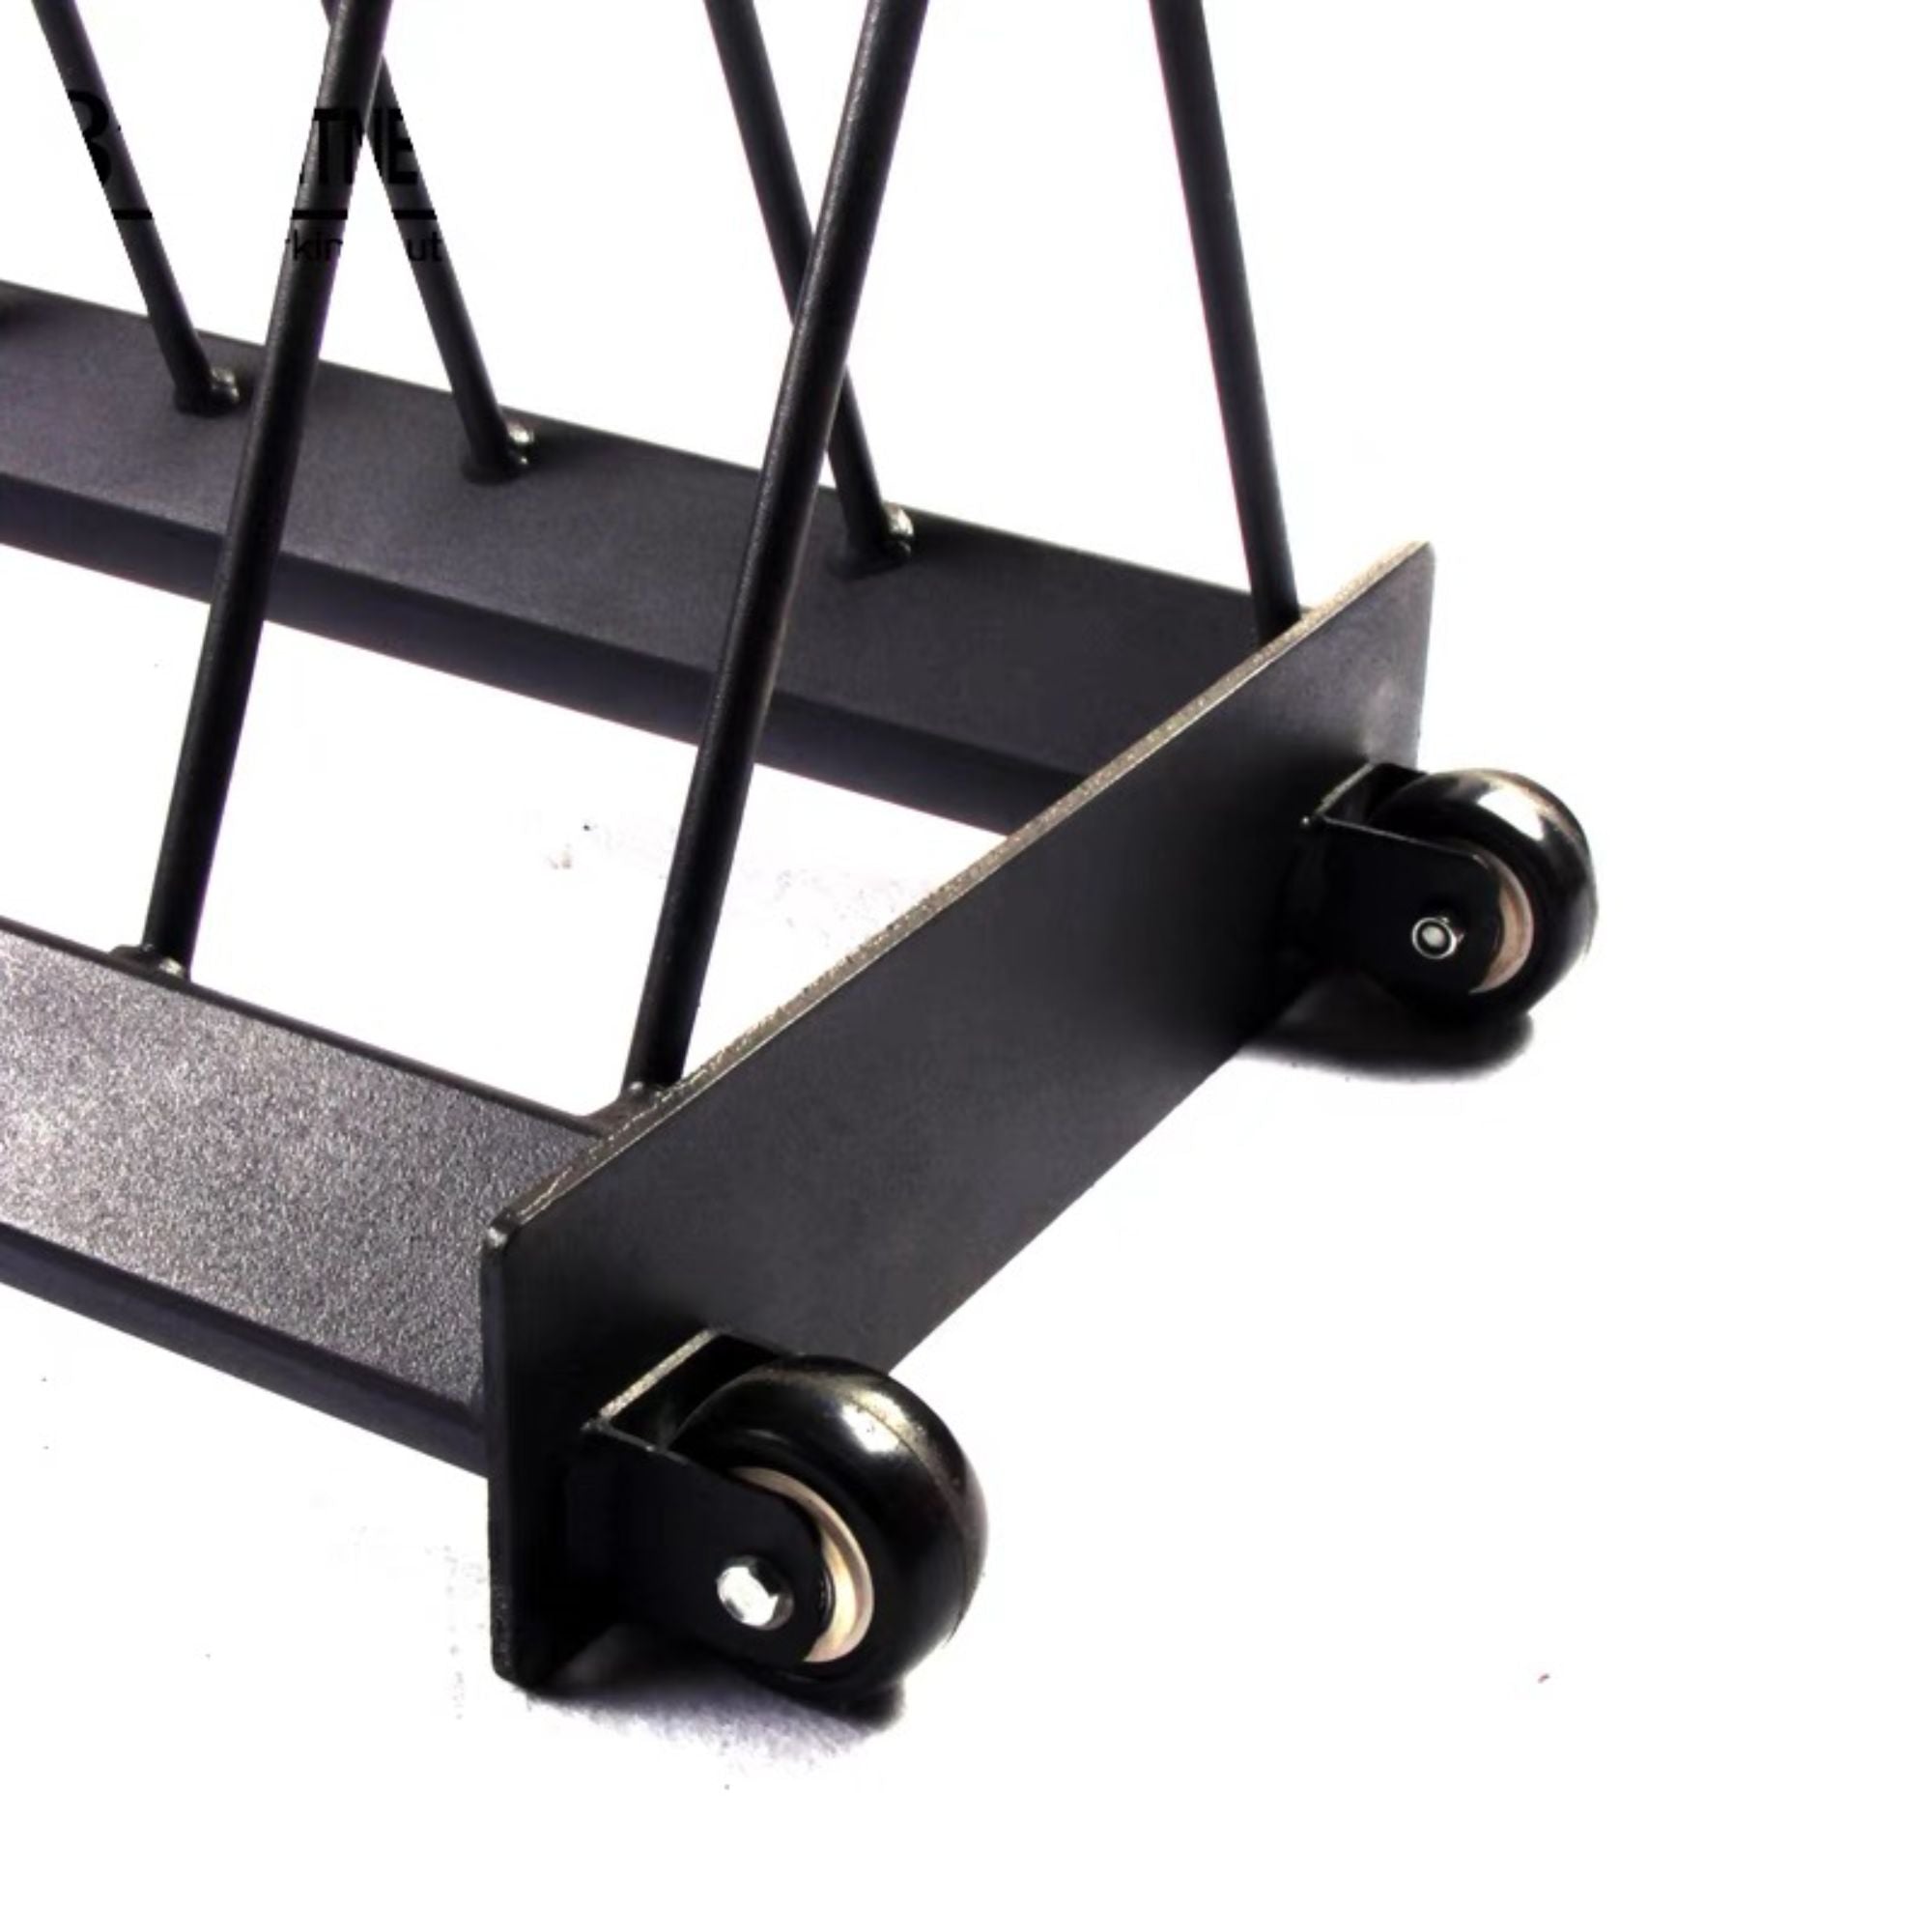 Bumper plate rack trolley - Cannons UK